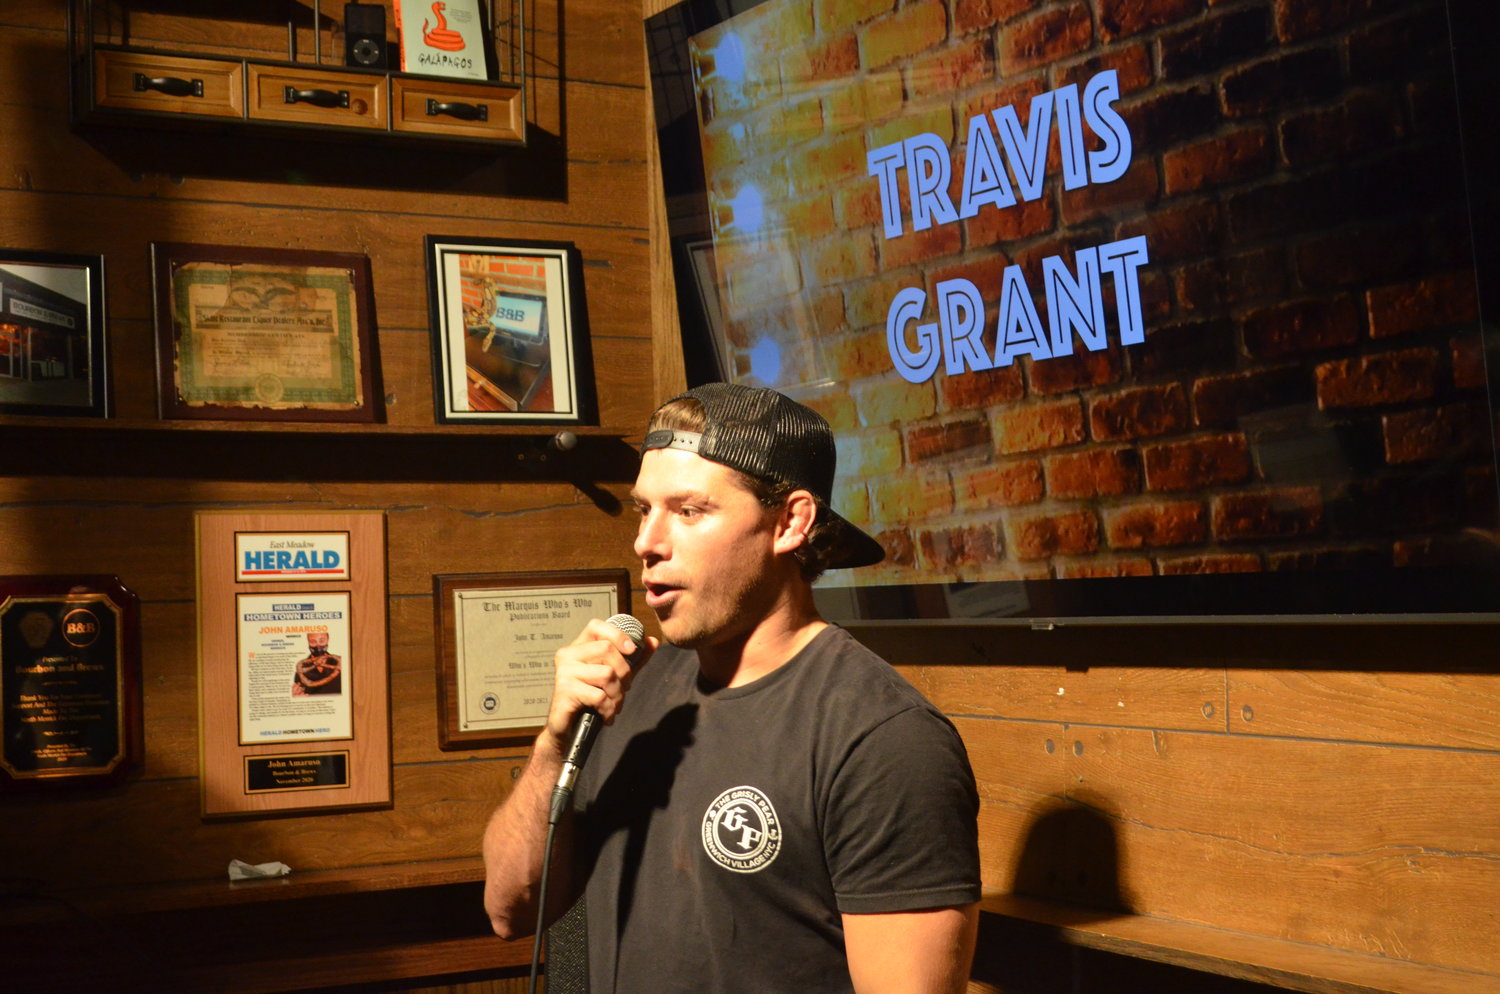 Travis Grant, a standup comedian, was the host of Bourbon & Brews’ festivities.